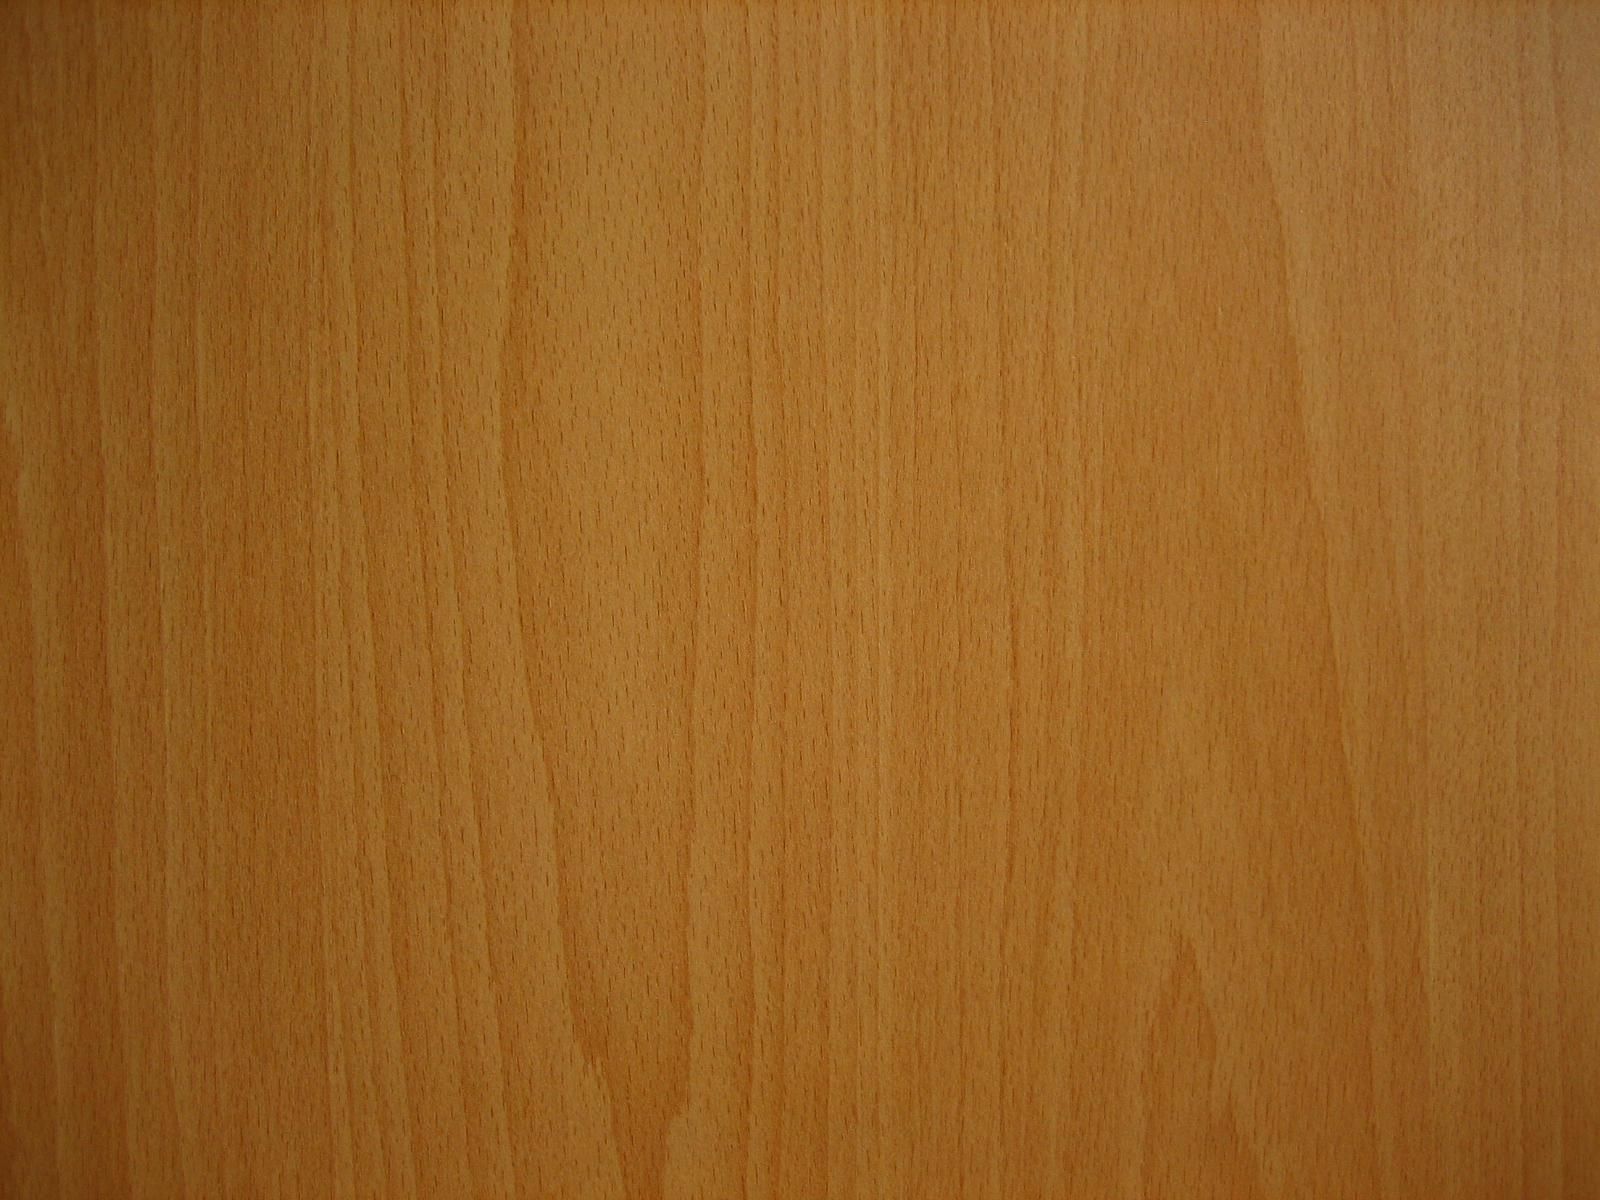 File:Surface wood chipboard.jpg - Wikimedia Commons